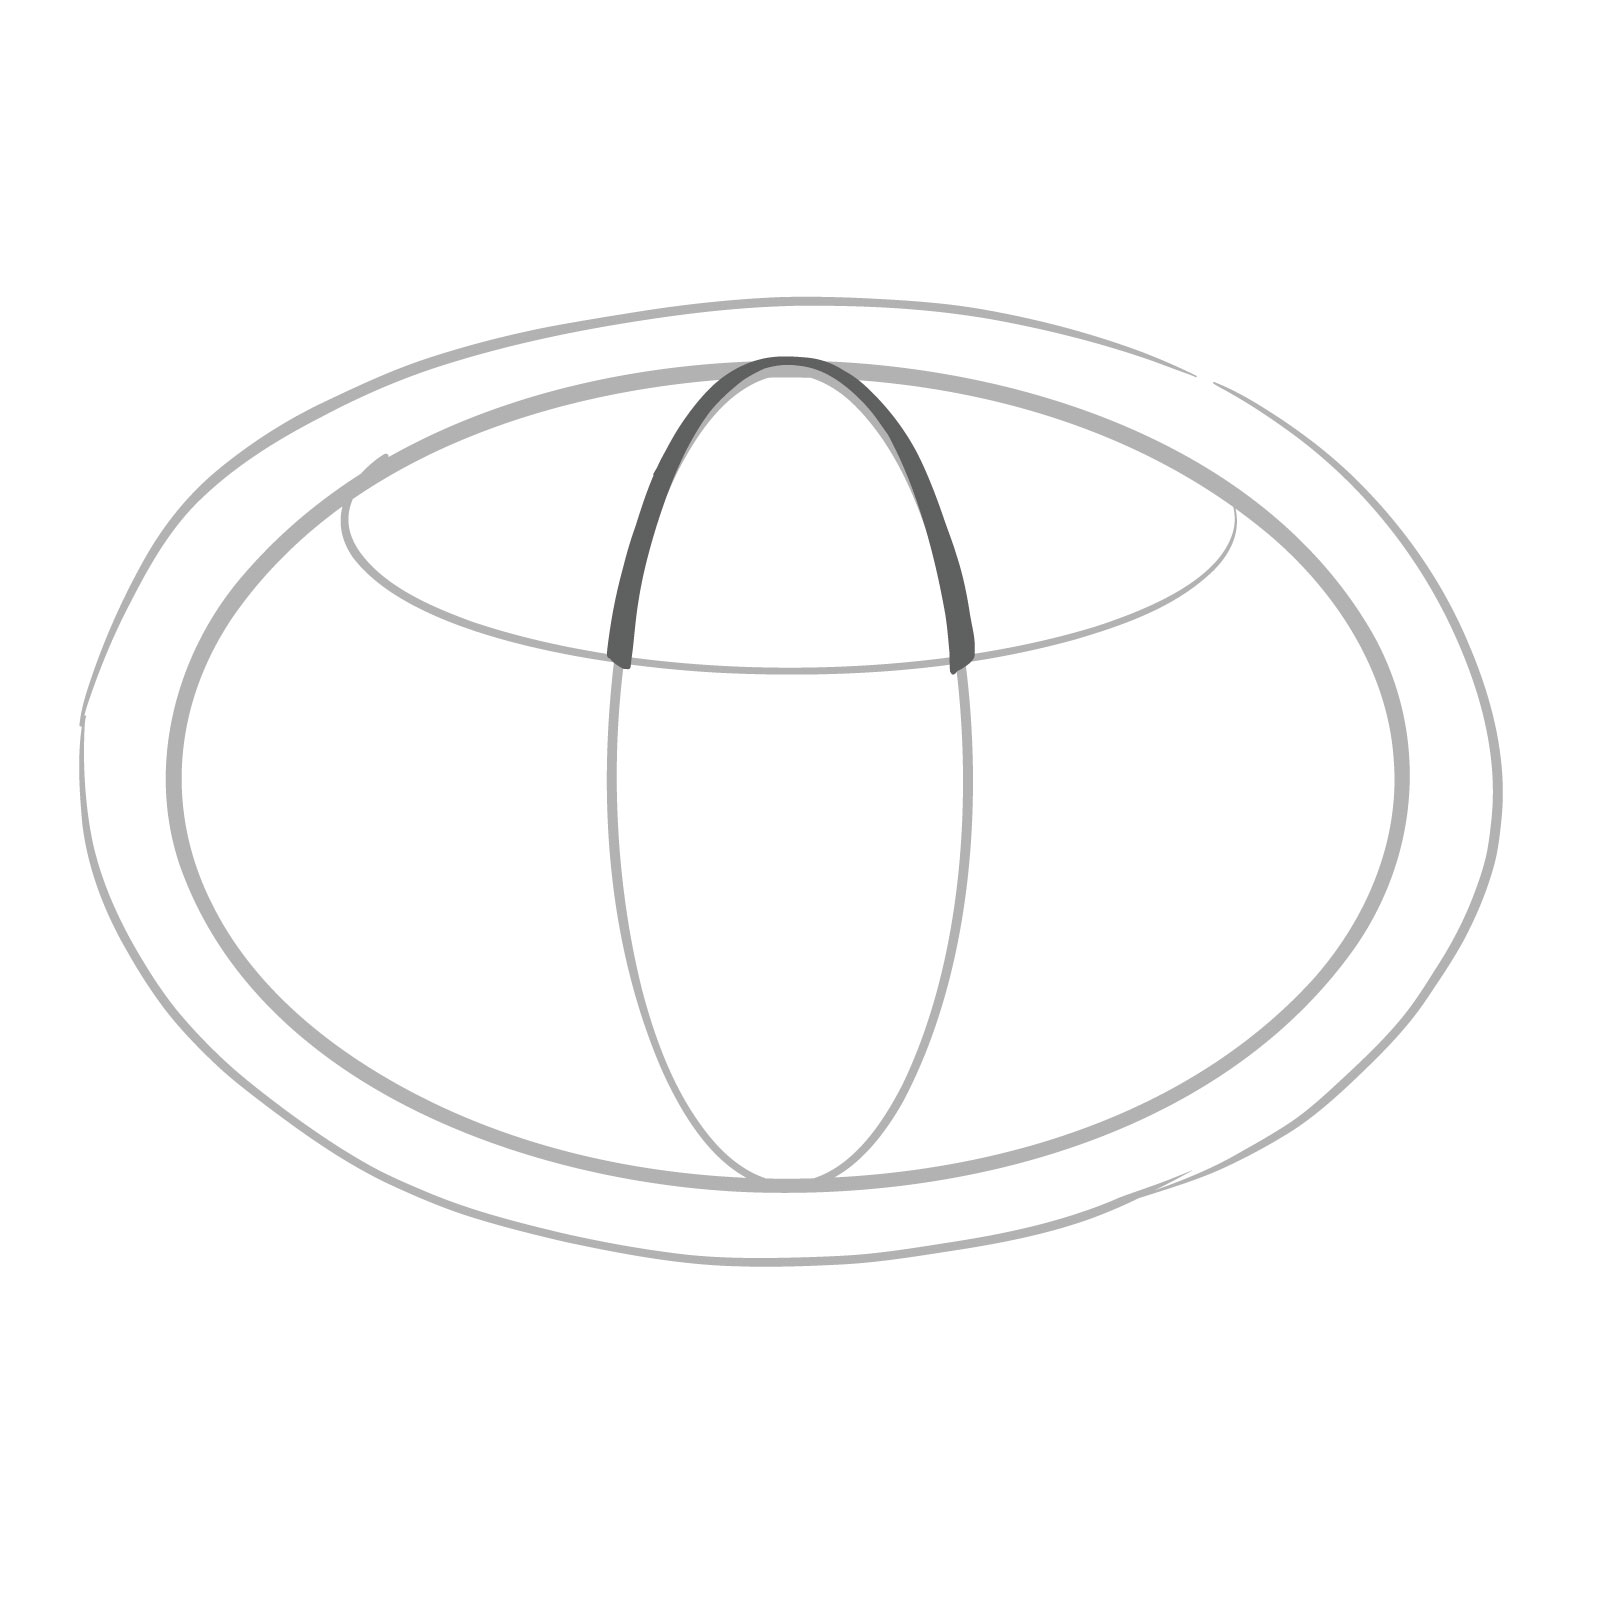 How to draw a Toyota logo - step 04